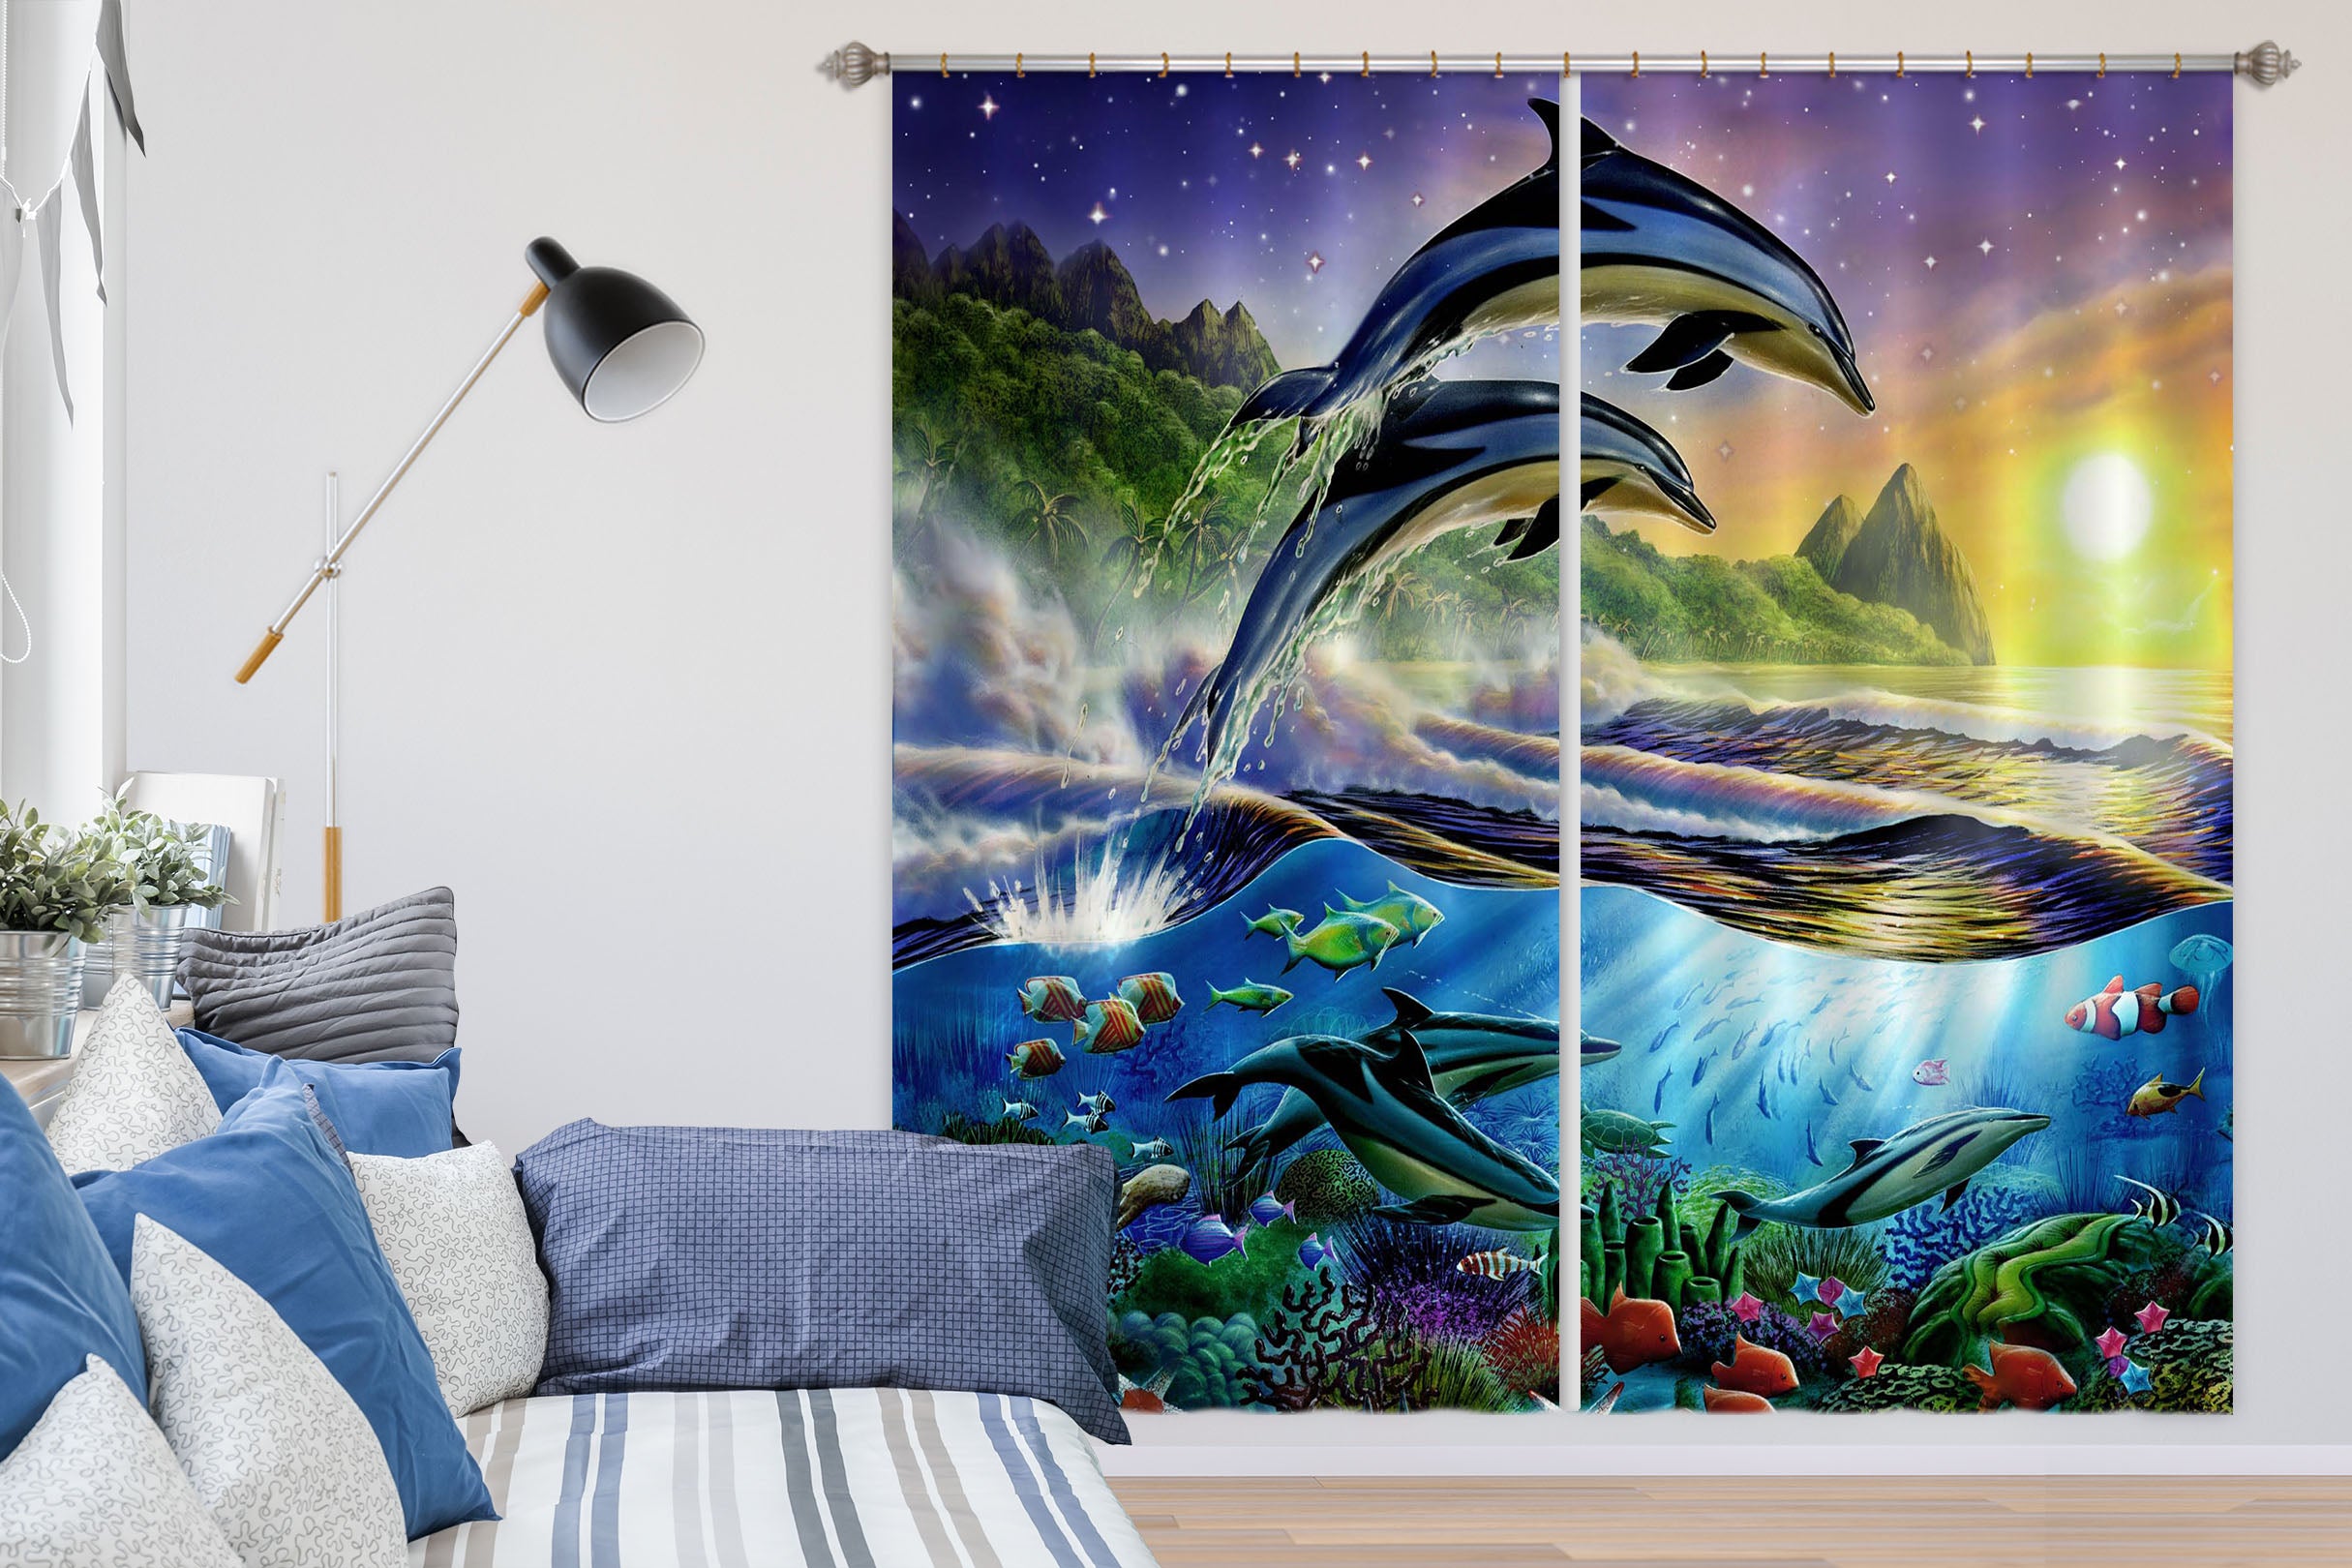 3D Dolphin Ocean 037 Adrian Chesterman Curtain Curtains Drapes